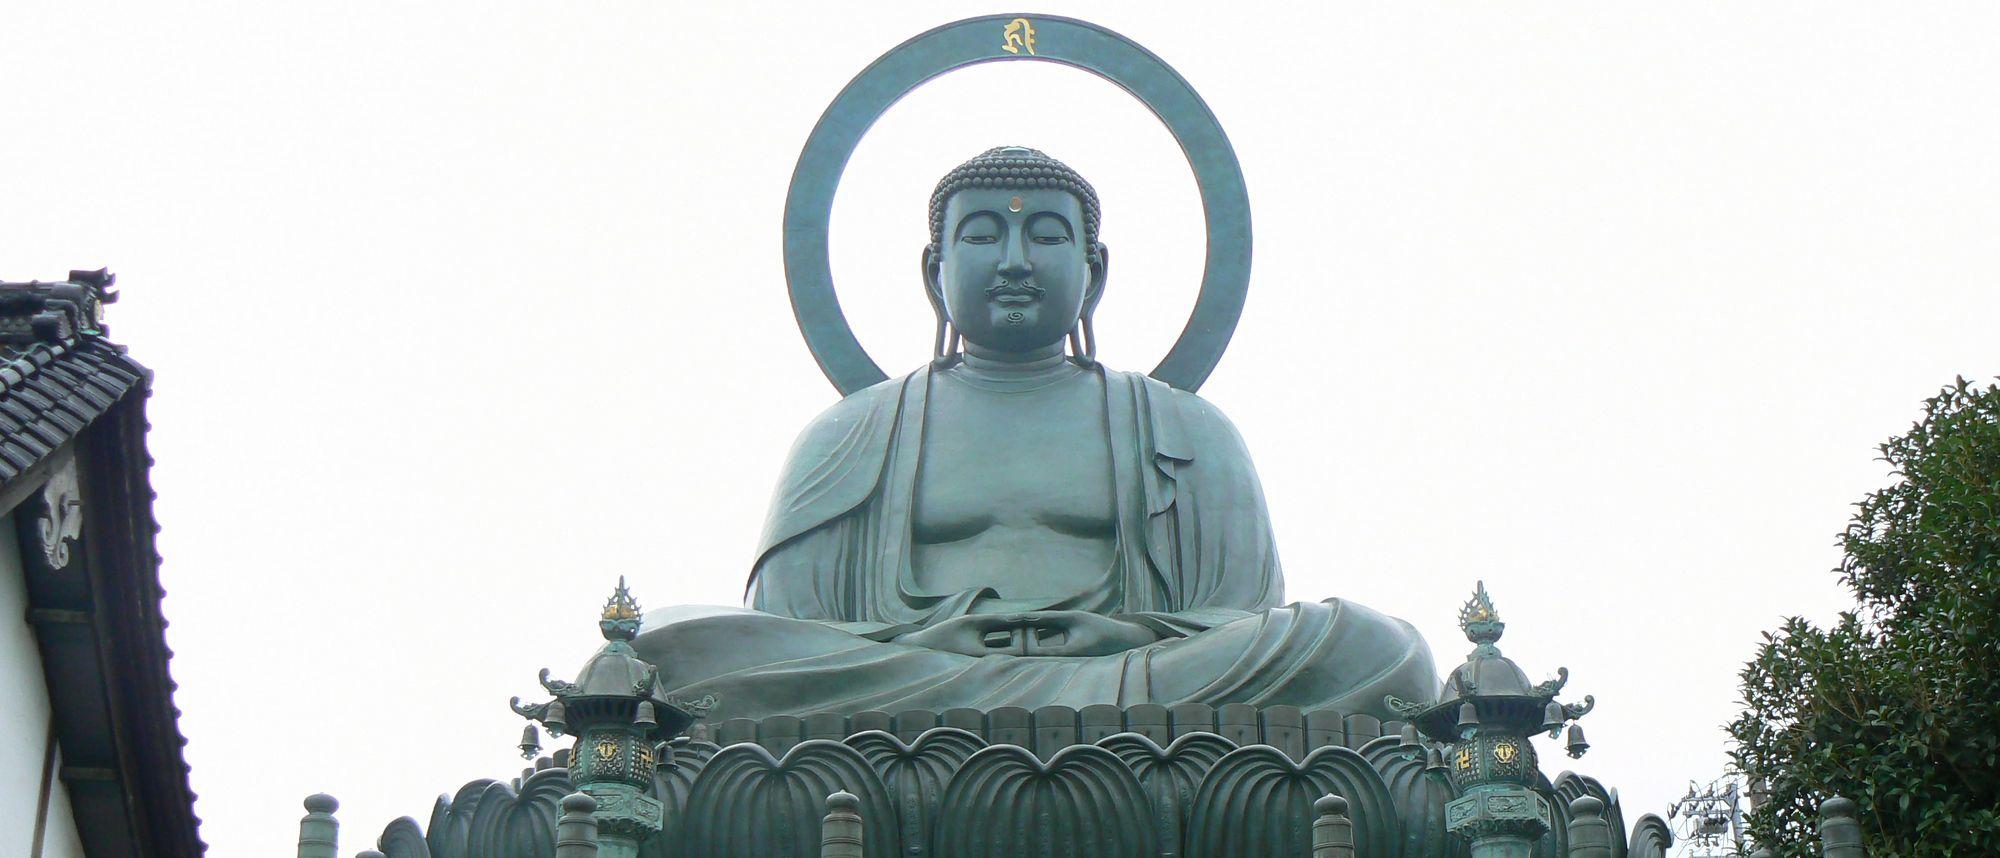 The Great Buddha of Takaoka, Toyama Prefecture